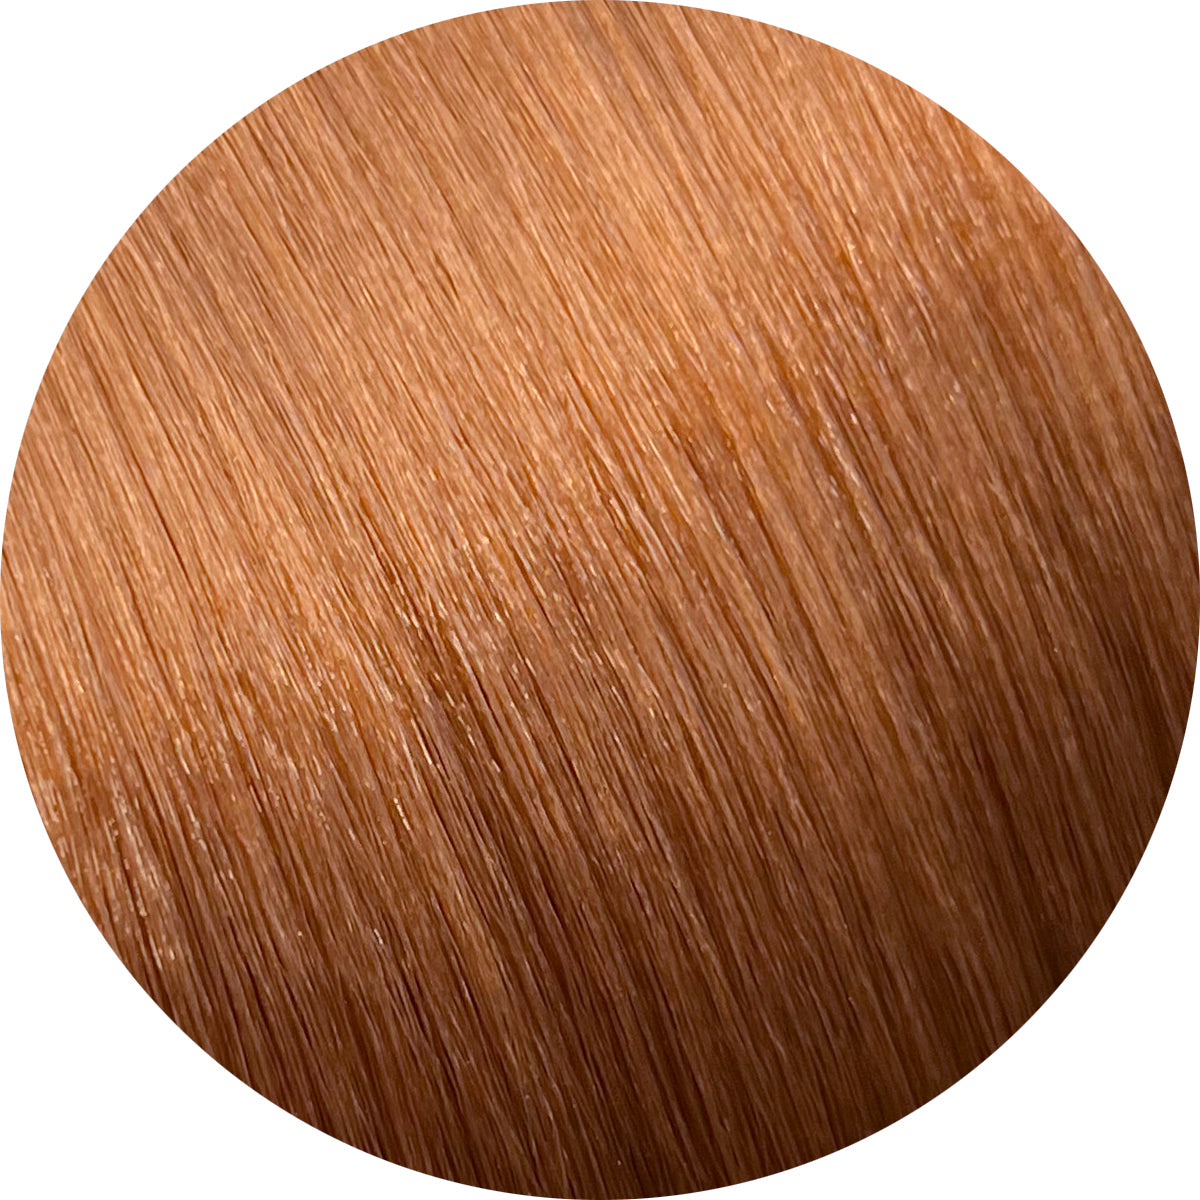 Copper Chocolate Nylon Doll Hair